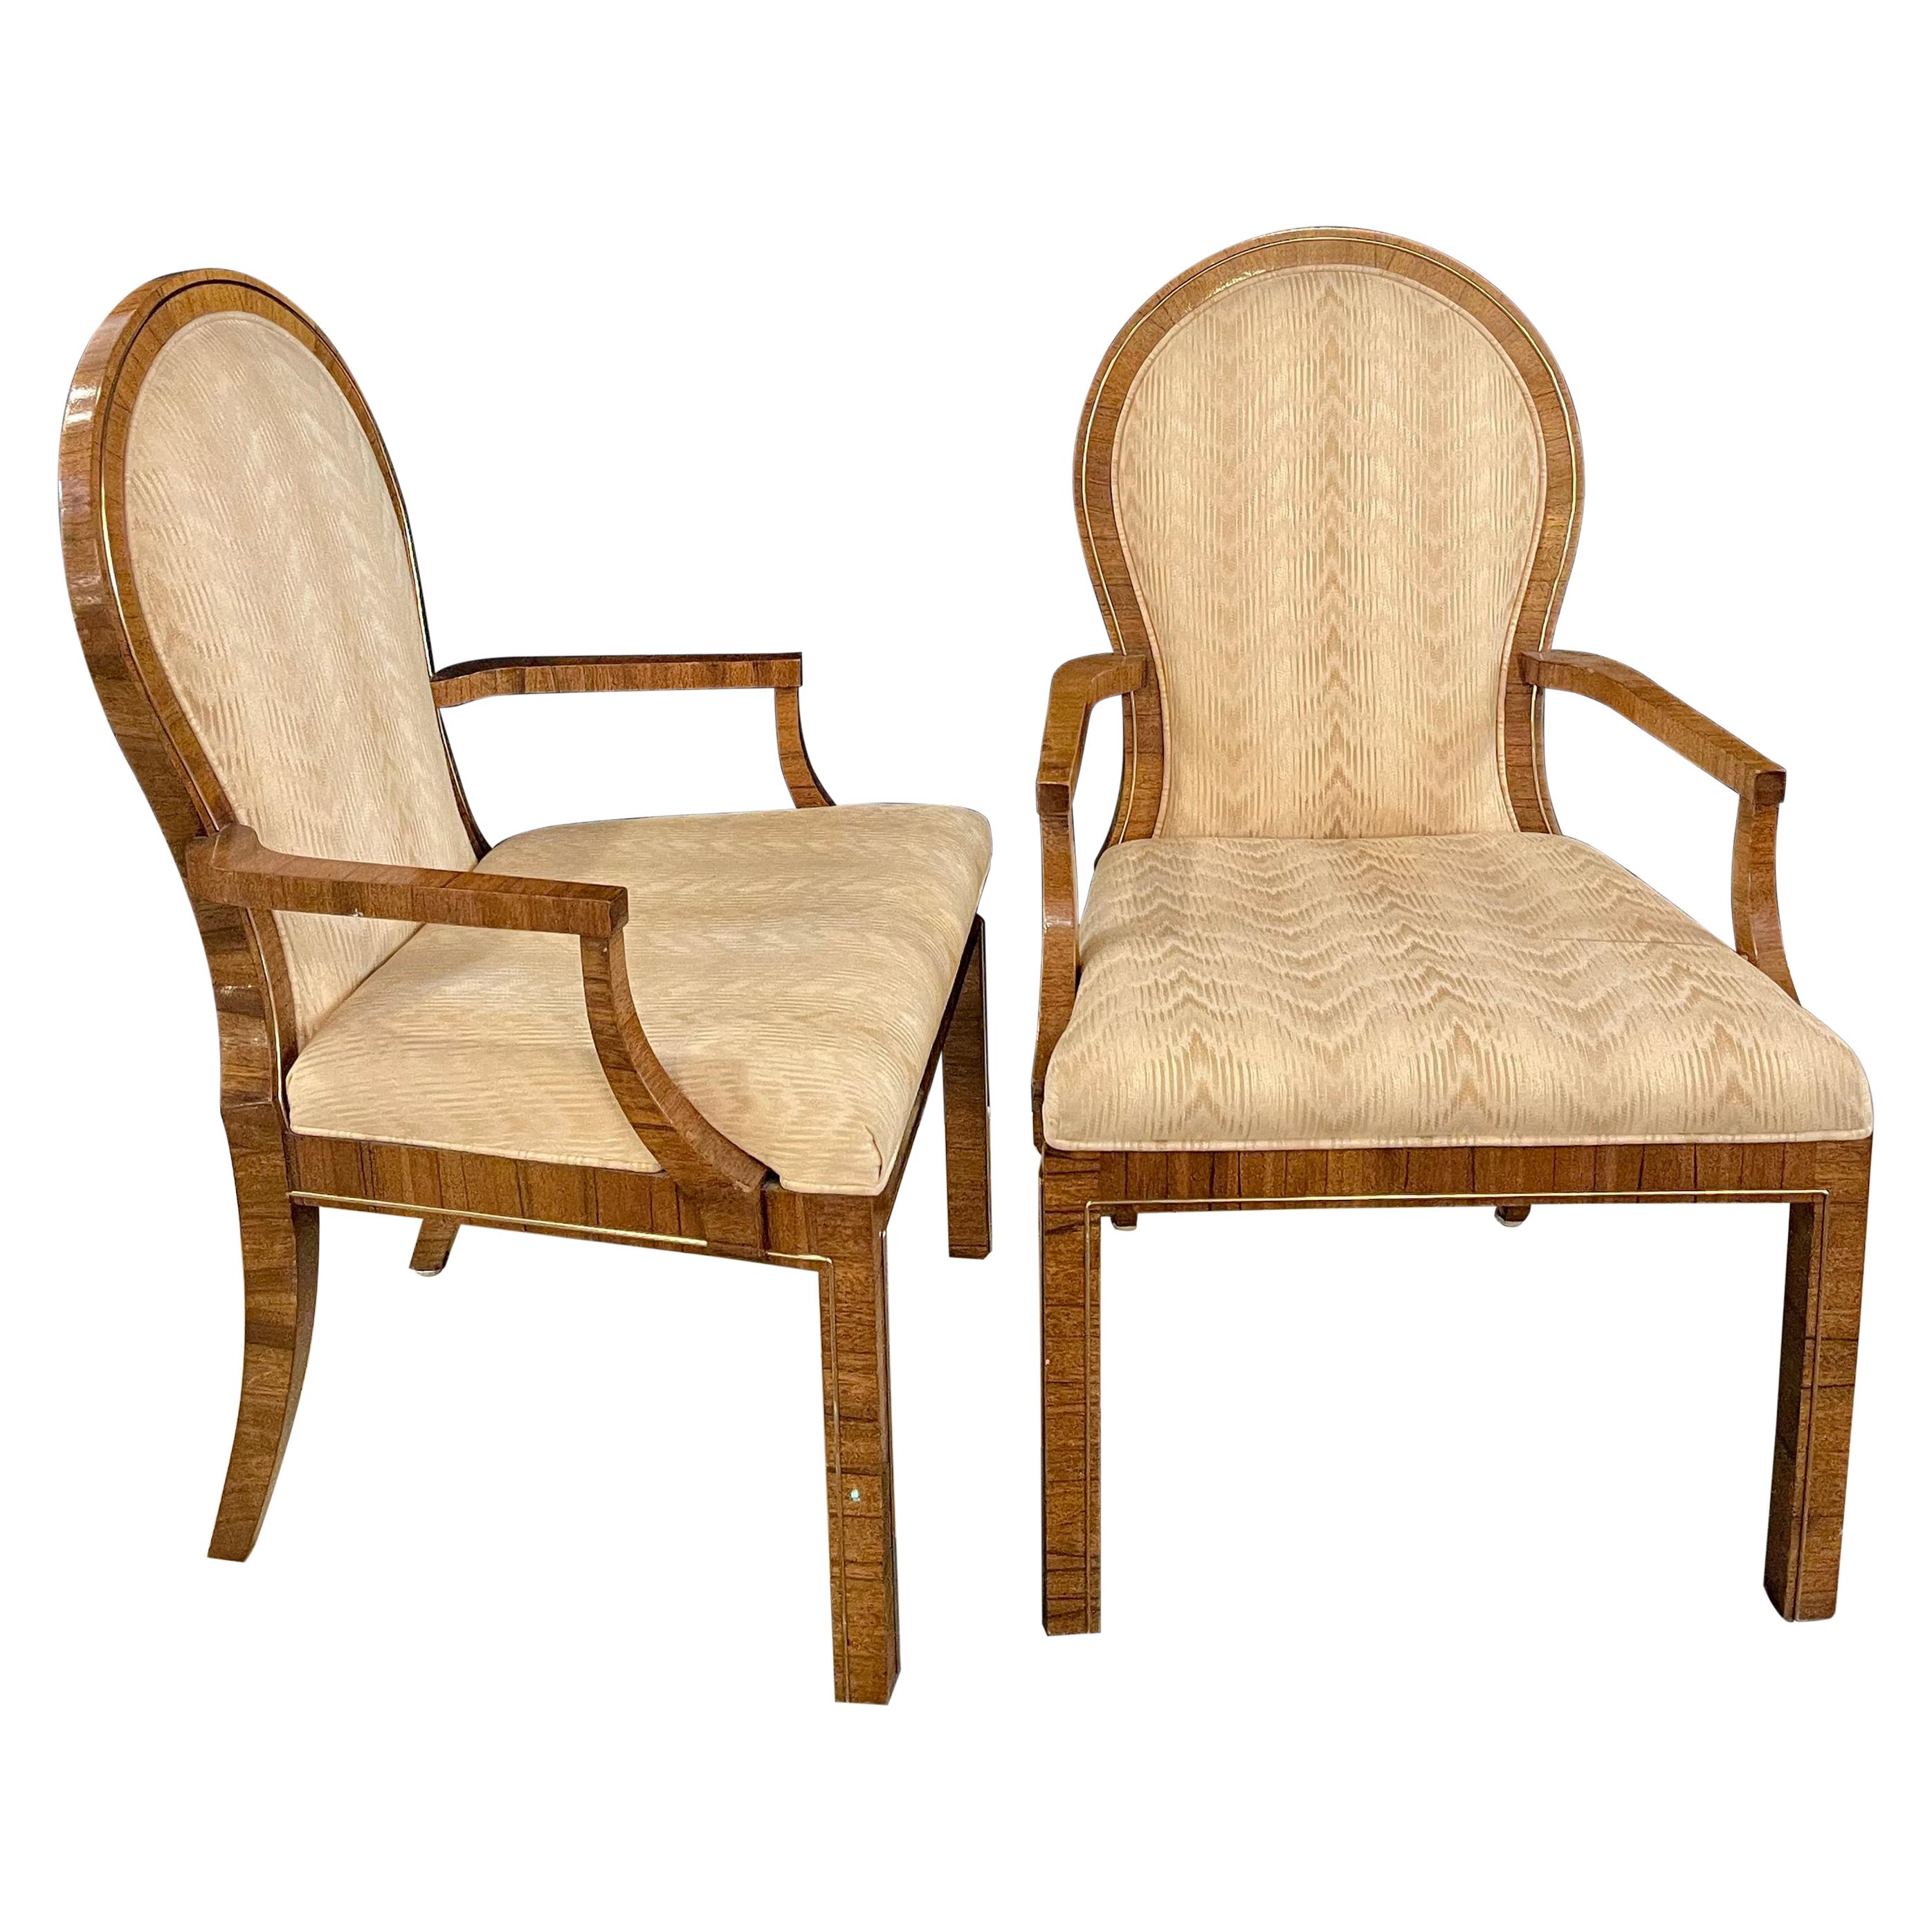 Pair of Milo Baughman Arm or Office Chairs, Mid-Century Modern, Mastercraft